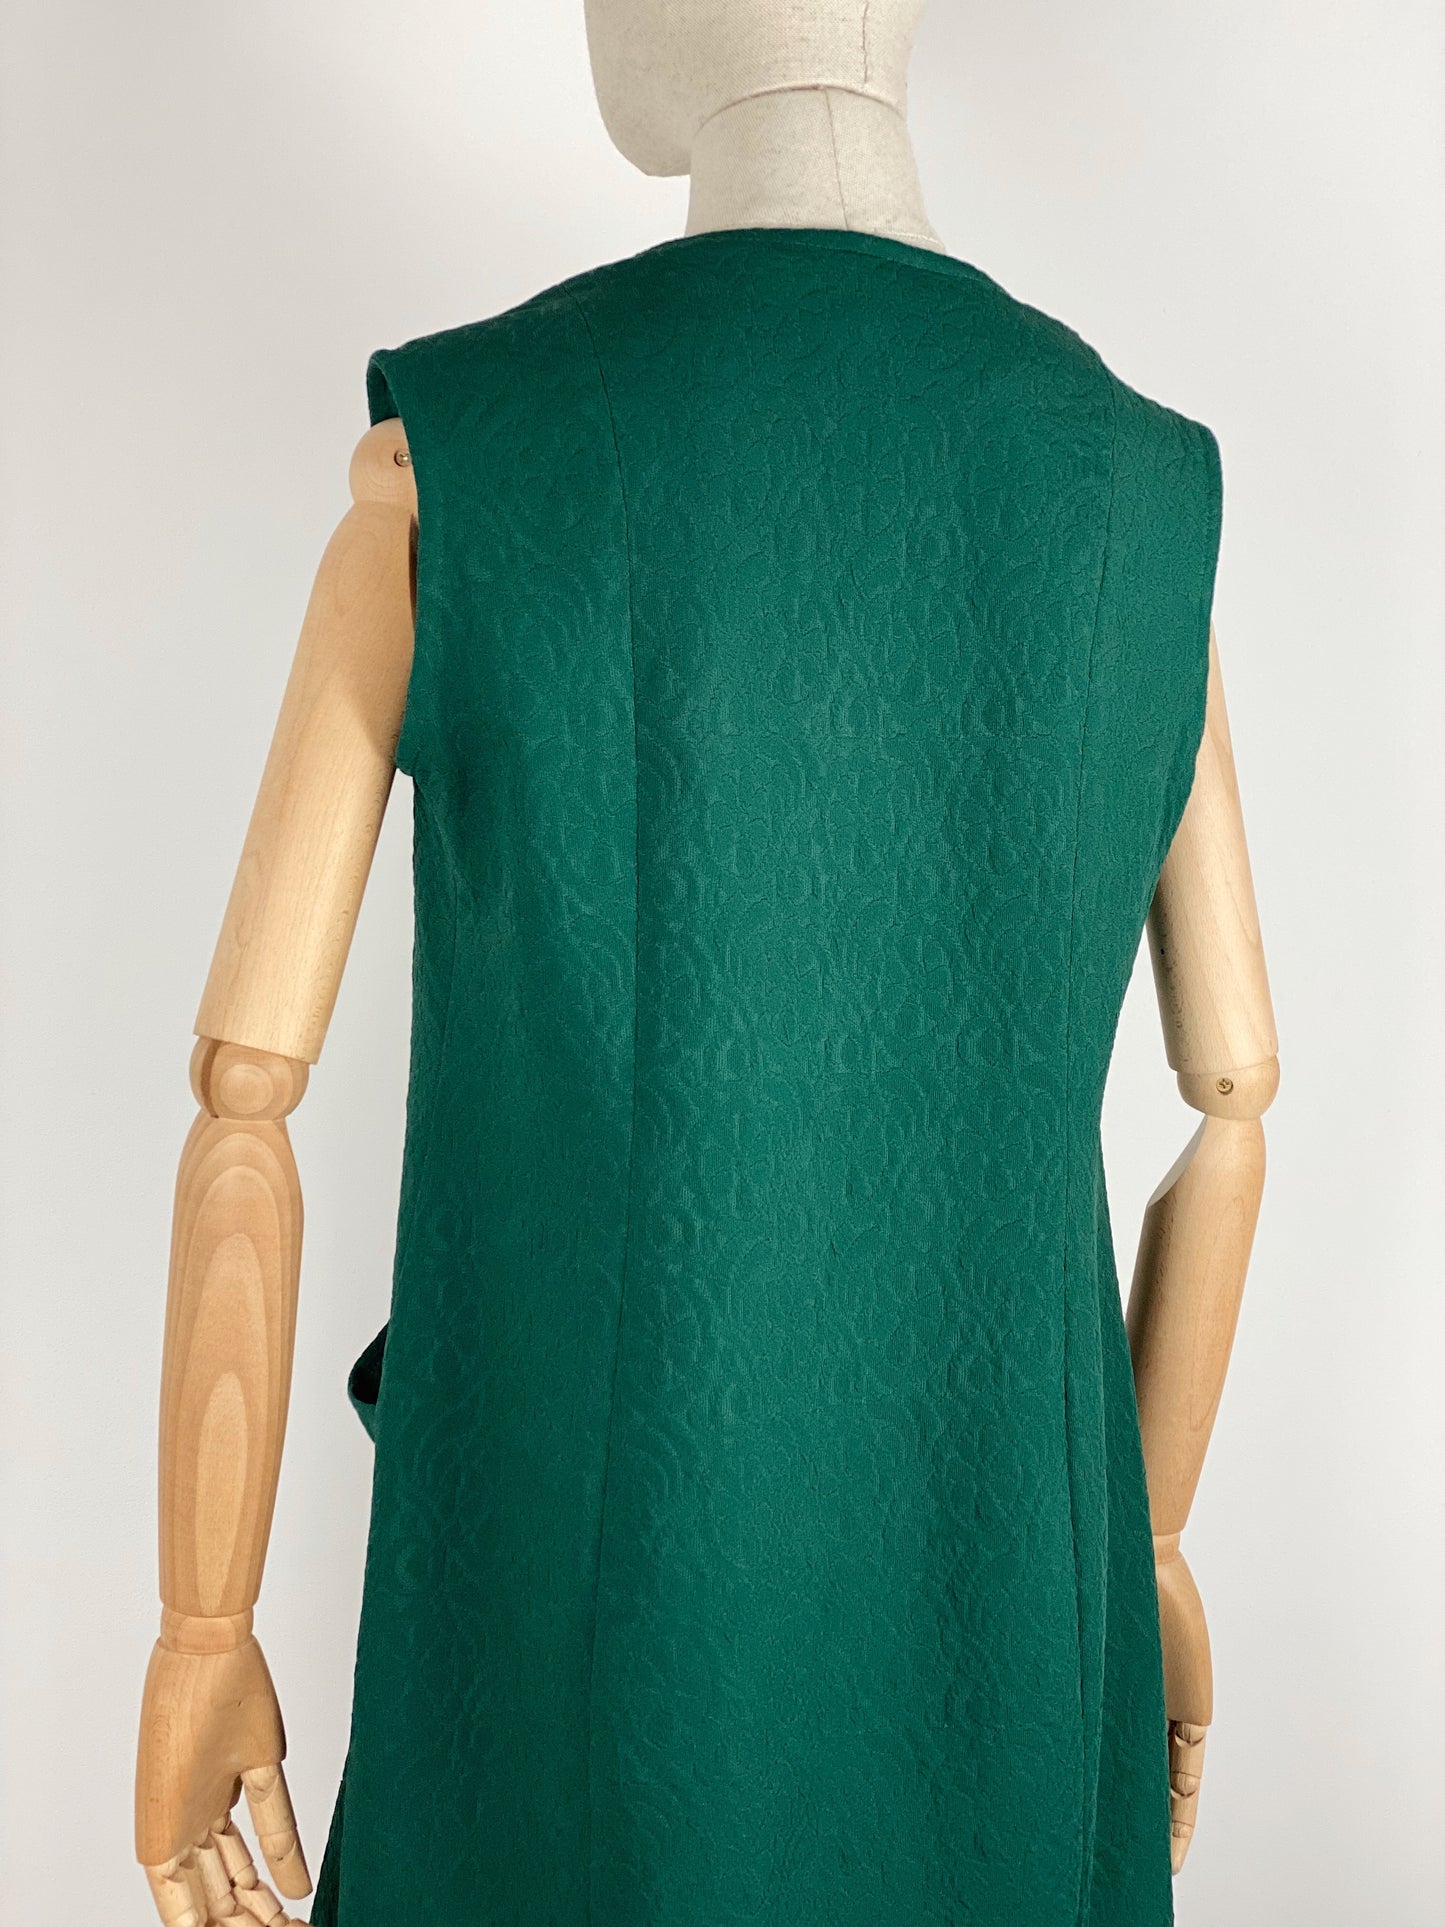 Vintage Green A-Line Dress